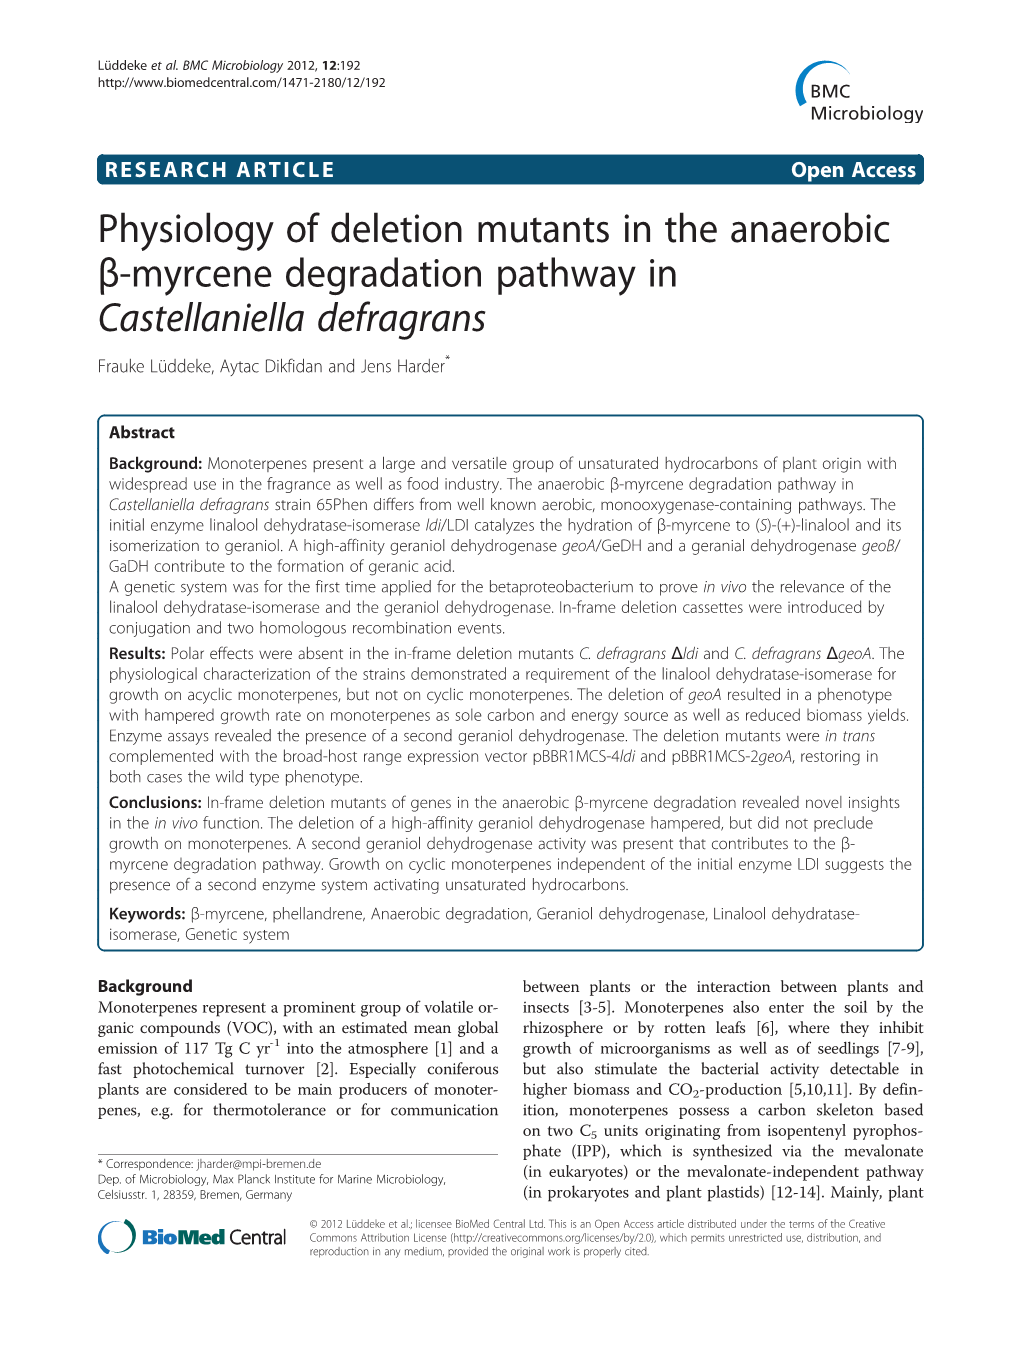 Physiology of Deletion Mutants in the Anaerobic Β-Myrcene Degradation Pathway in Castellaniella Defragrans Frauke Lüddeke, Aytac Dikfidan and Jens Harder*